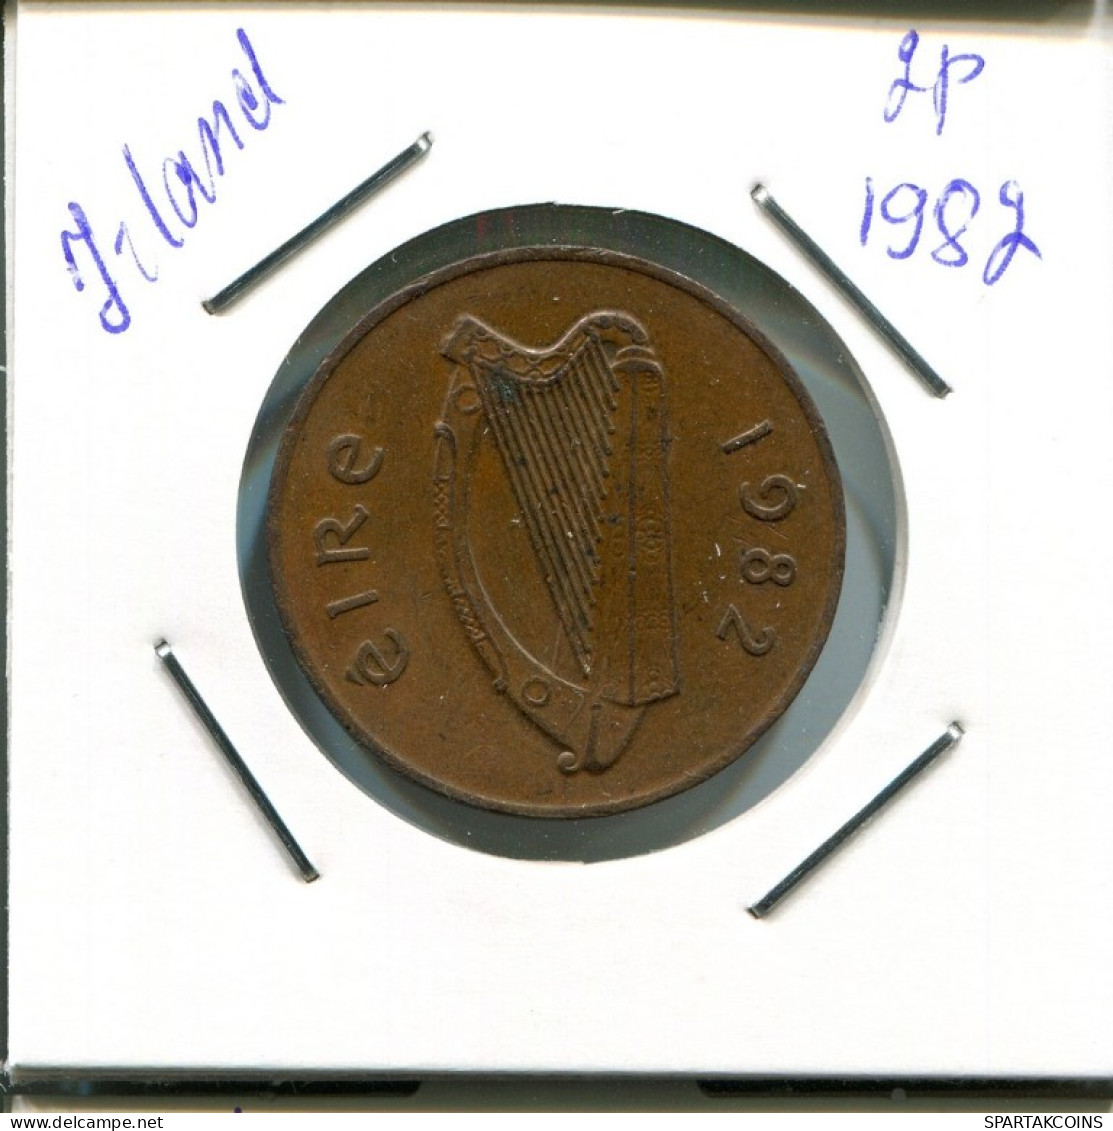 2 PENCE 1982 IRLANDA IRELAND Moneda #AN621.E.A - Ierland